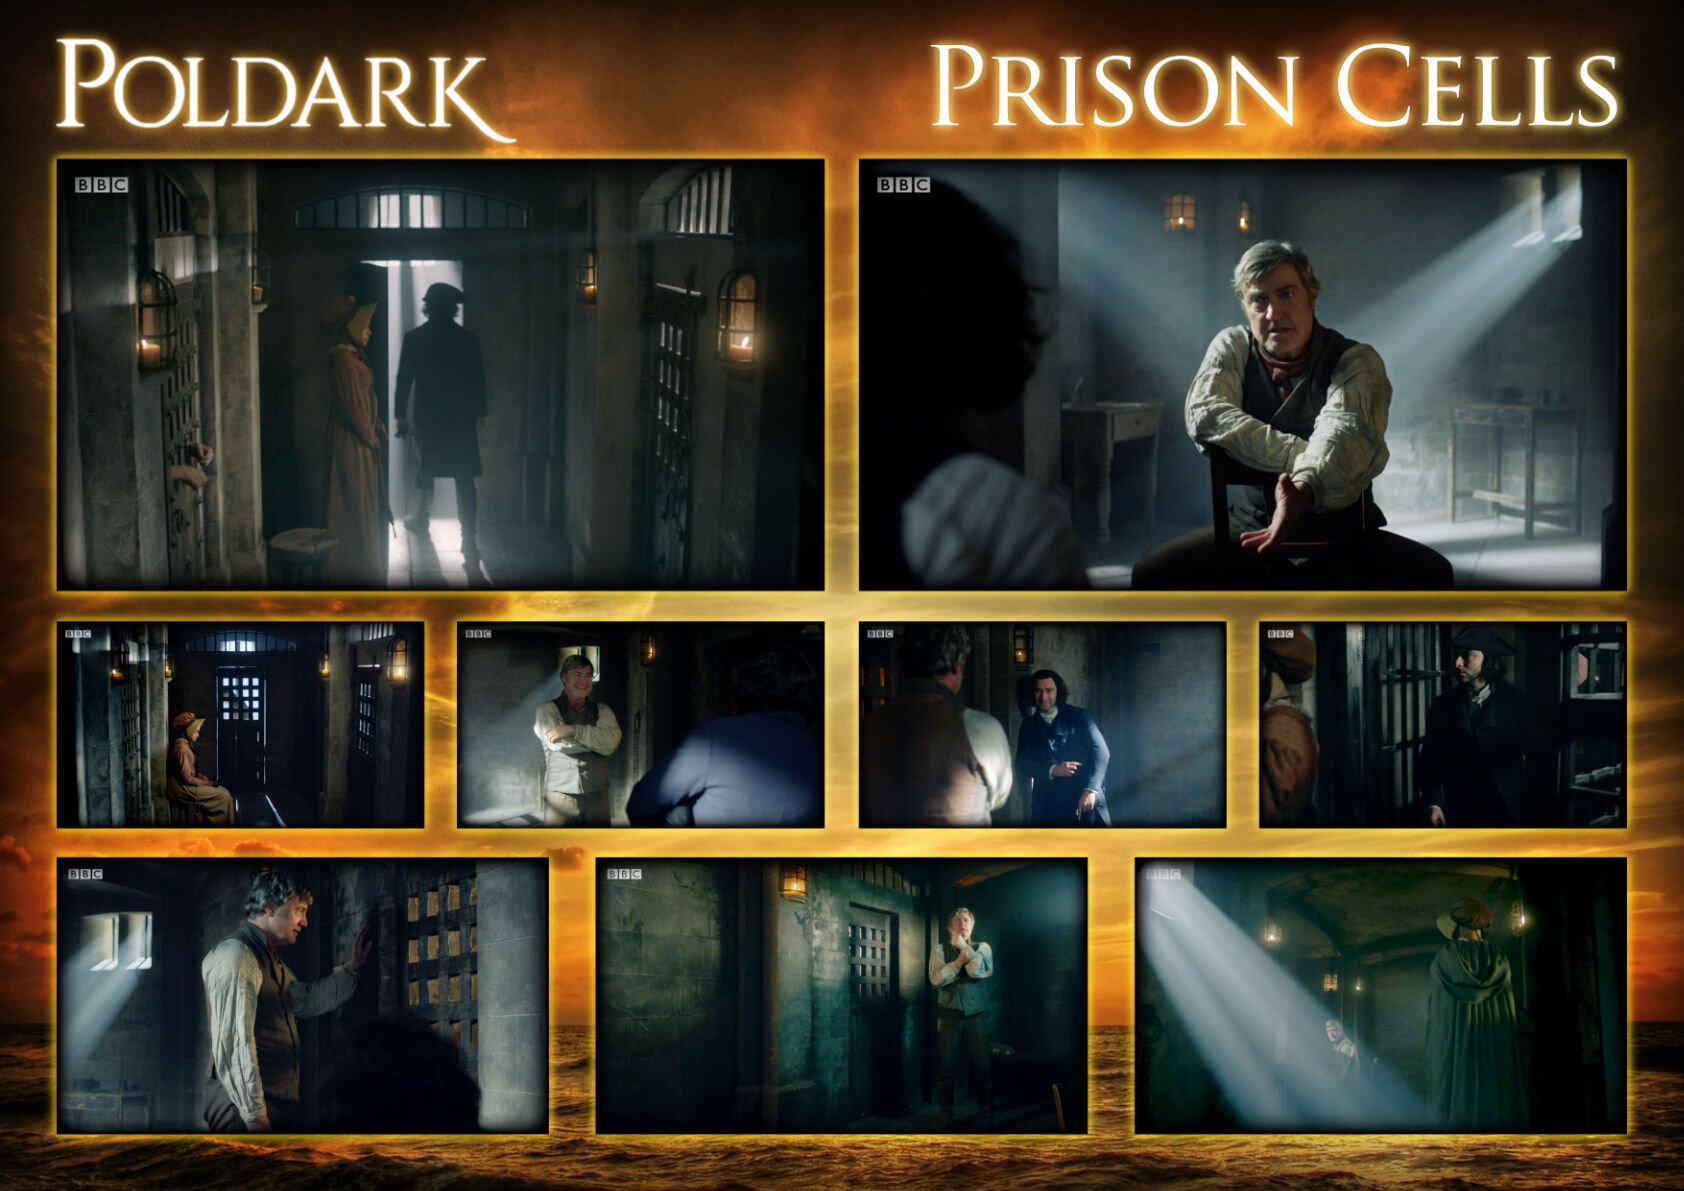 Poldark - Prison Cell Pic Sheet 144dpi.jpg